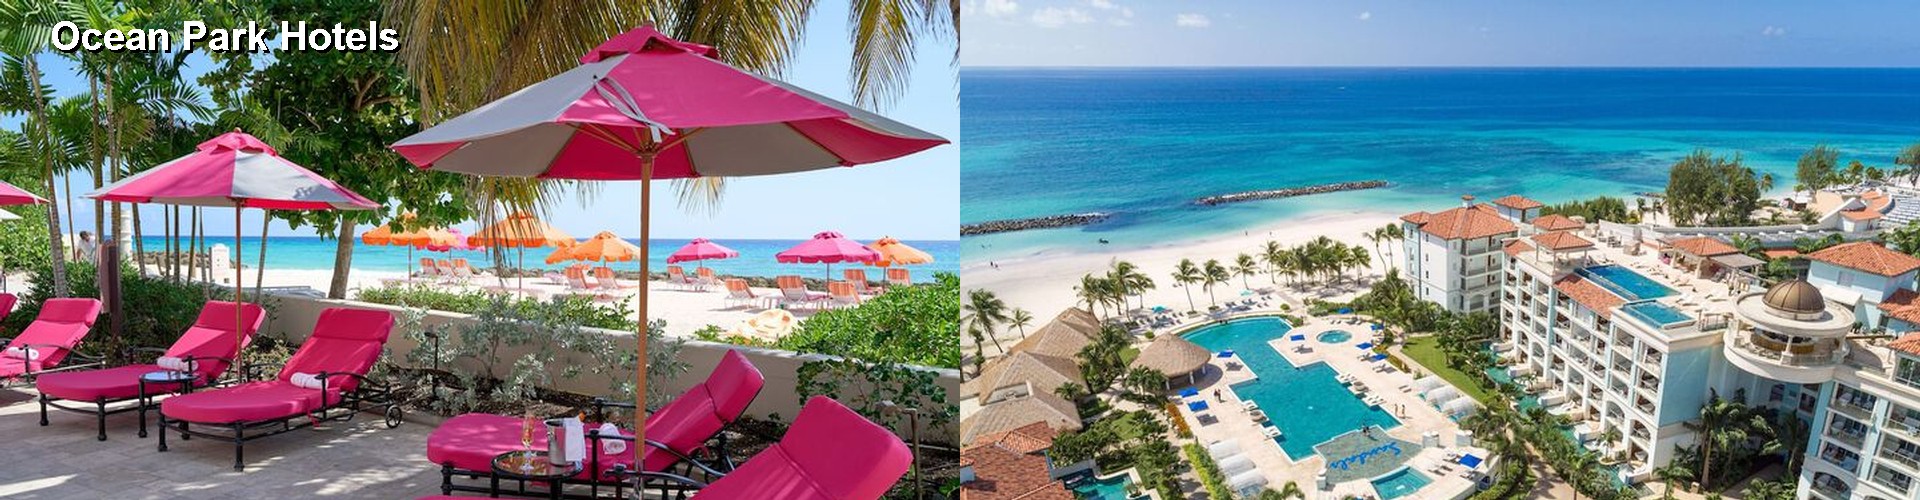 3 Best Hotels near Ocean Park